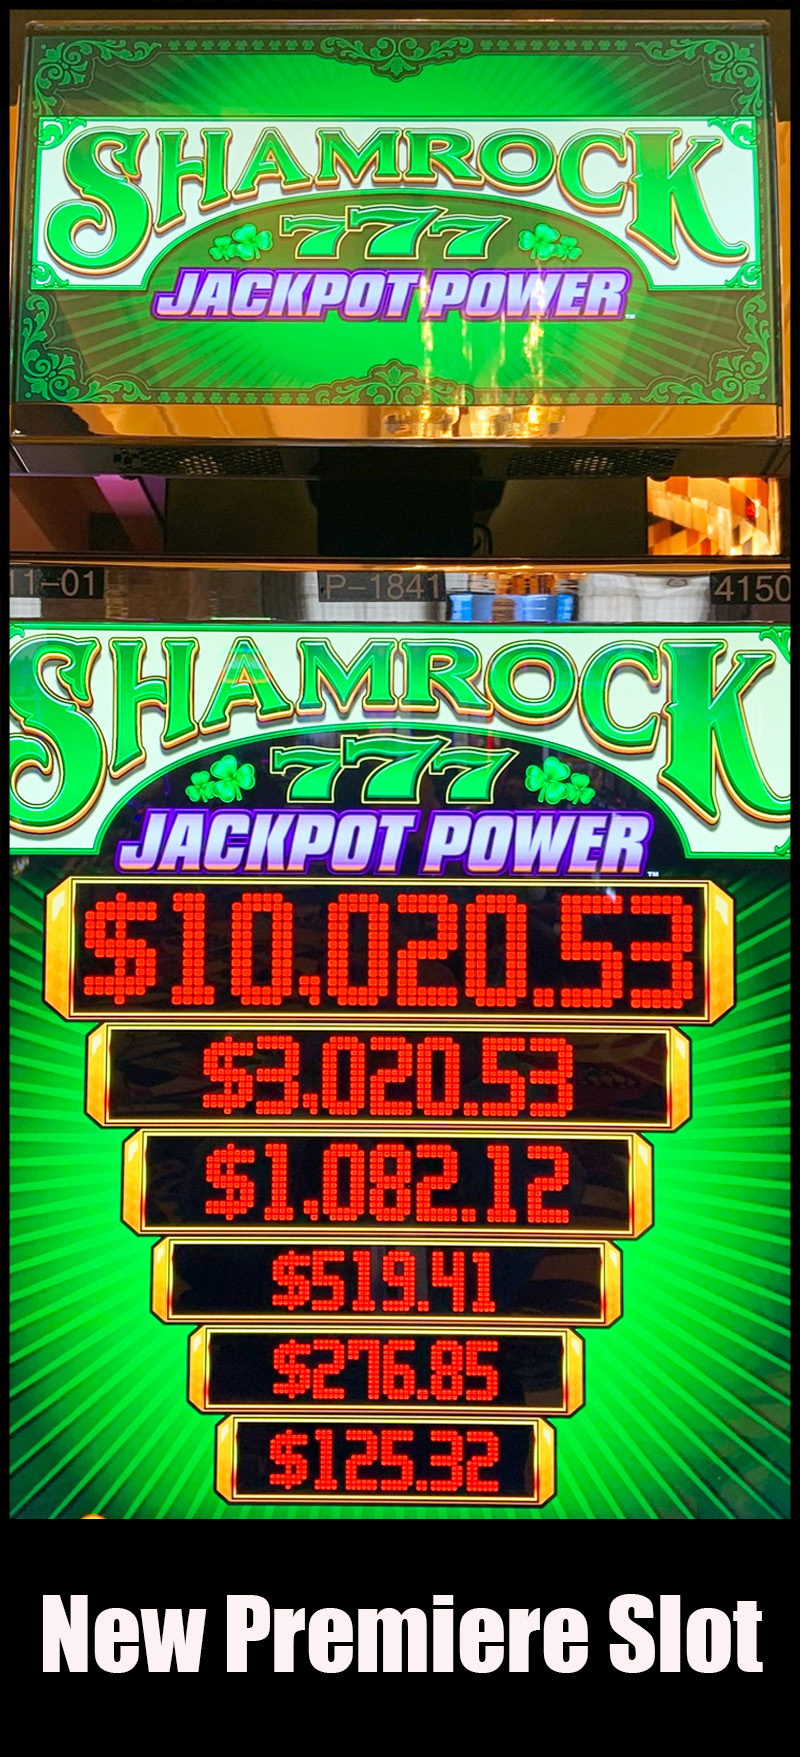 Premiere Slot - Shamrock Jackpot Power